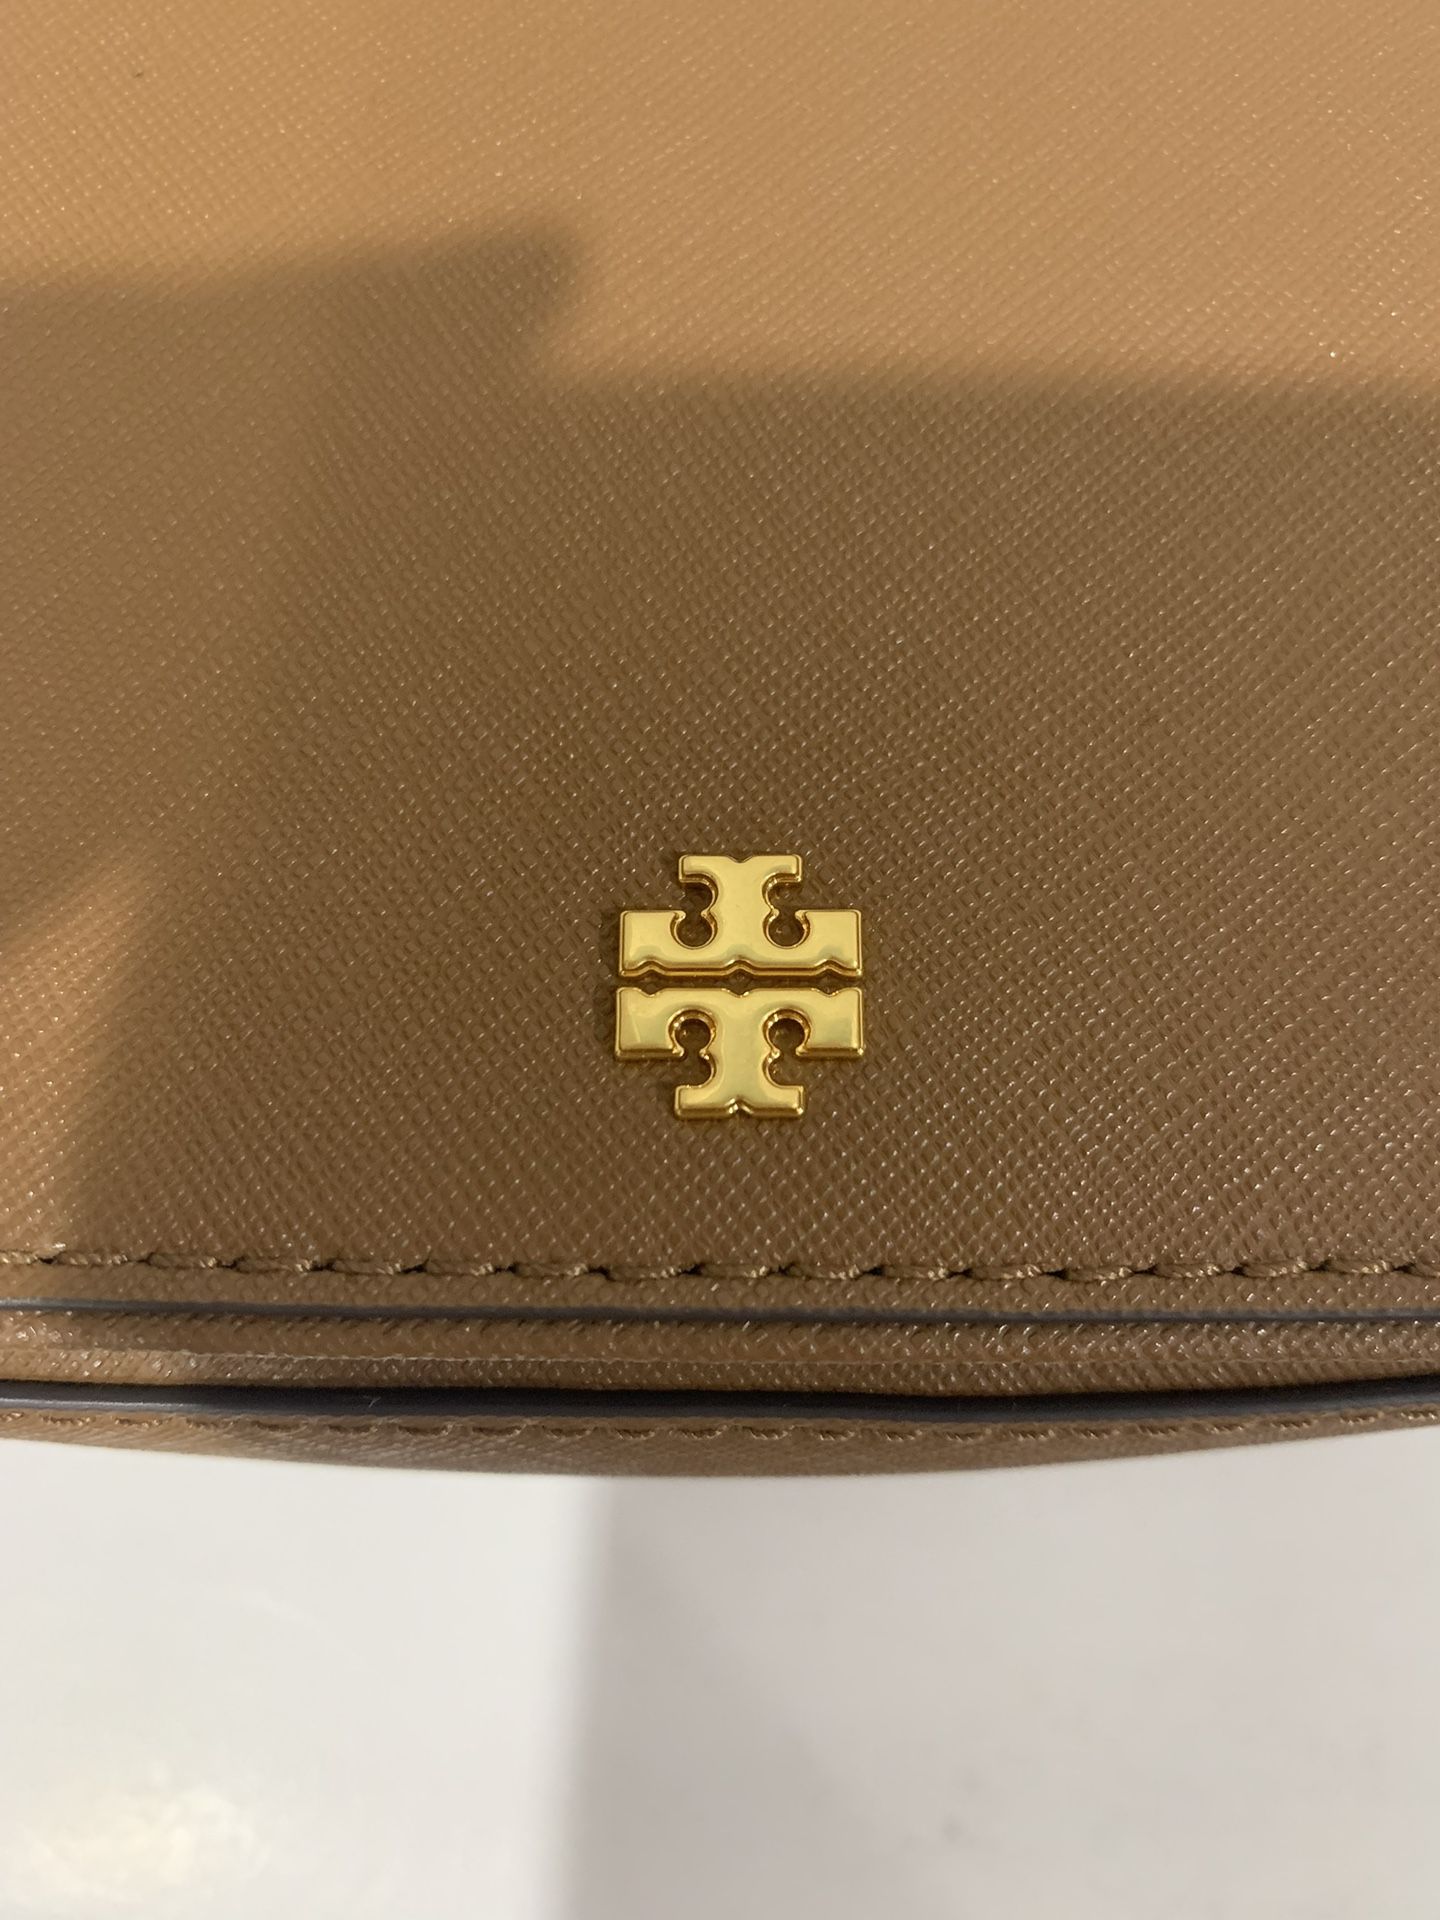 NWT! TORY BURCH EMERSON Top Handle Leather Crossbody Bag Logo Chain Strap